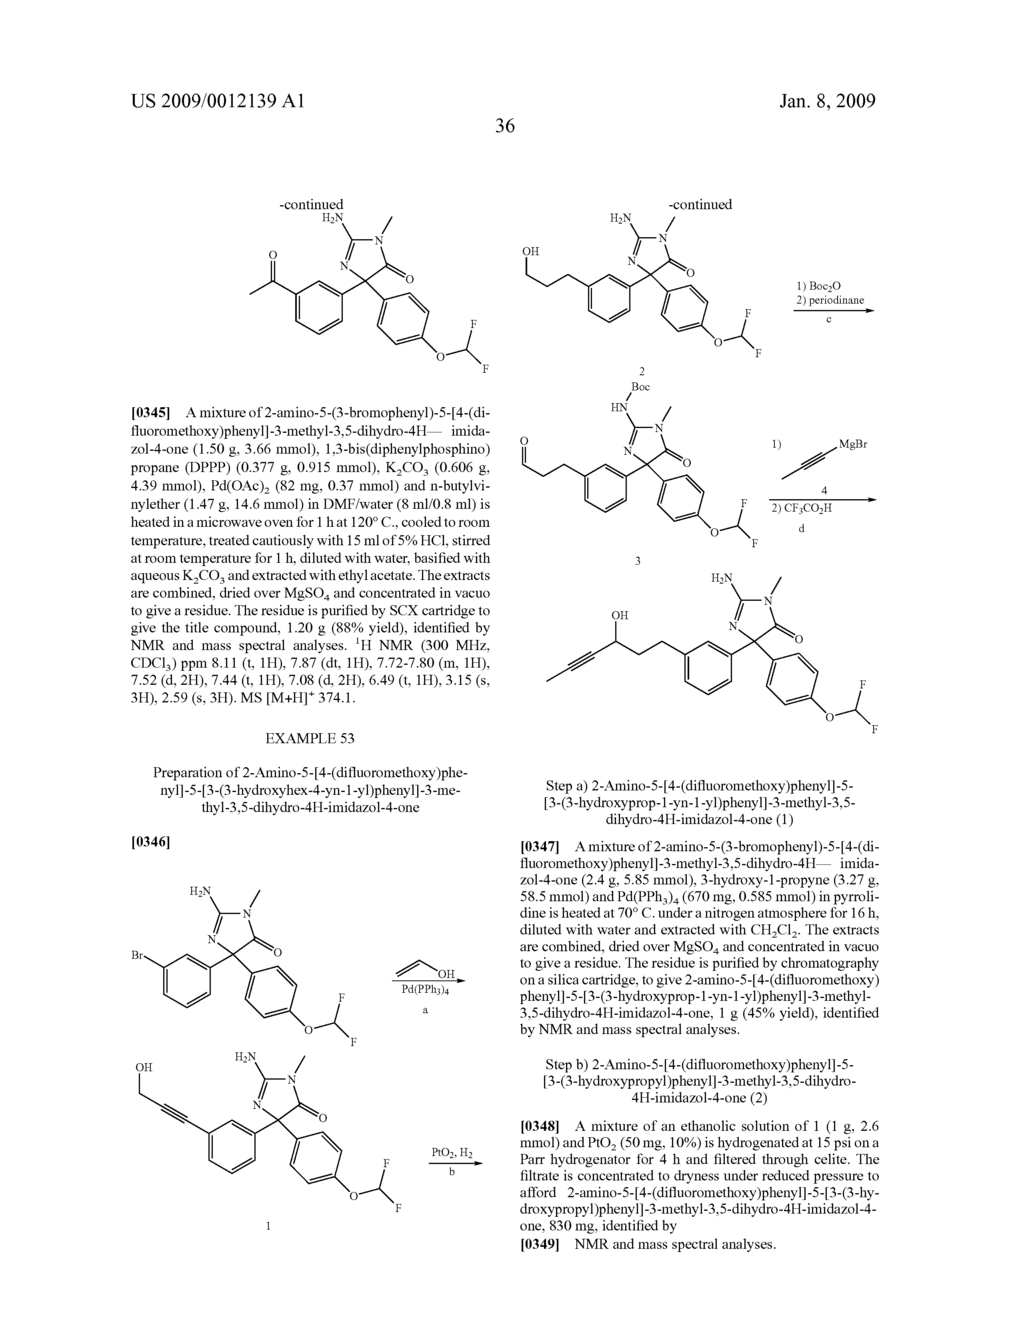 AMINO-5-[4-(DIFLUOROMETHOXY) PHENYL]-5-PHENYLIMIDAZOLONE COMPOUNDS FOR THE INHIBITION OF BETA-SECRETASE - diagram, schematic, and image 37